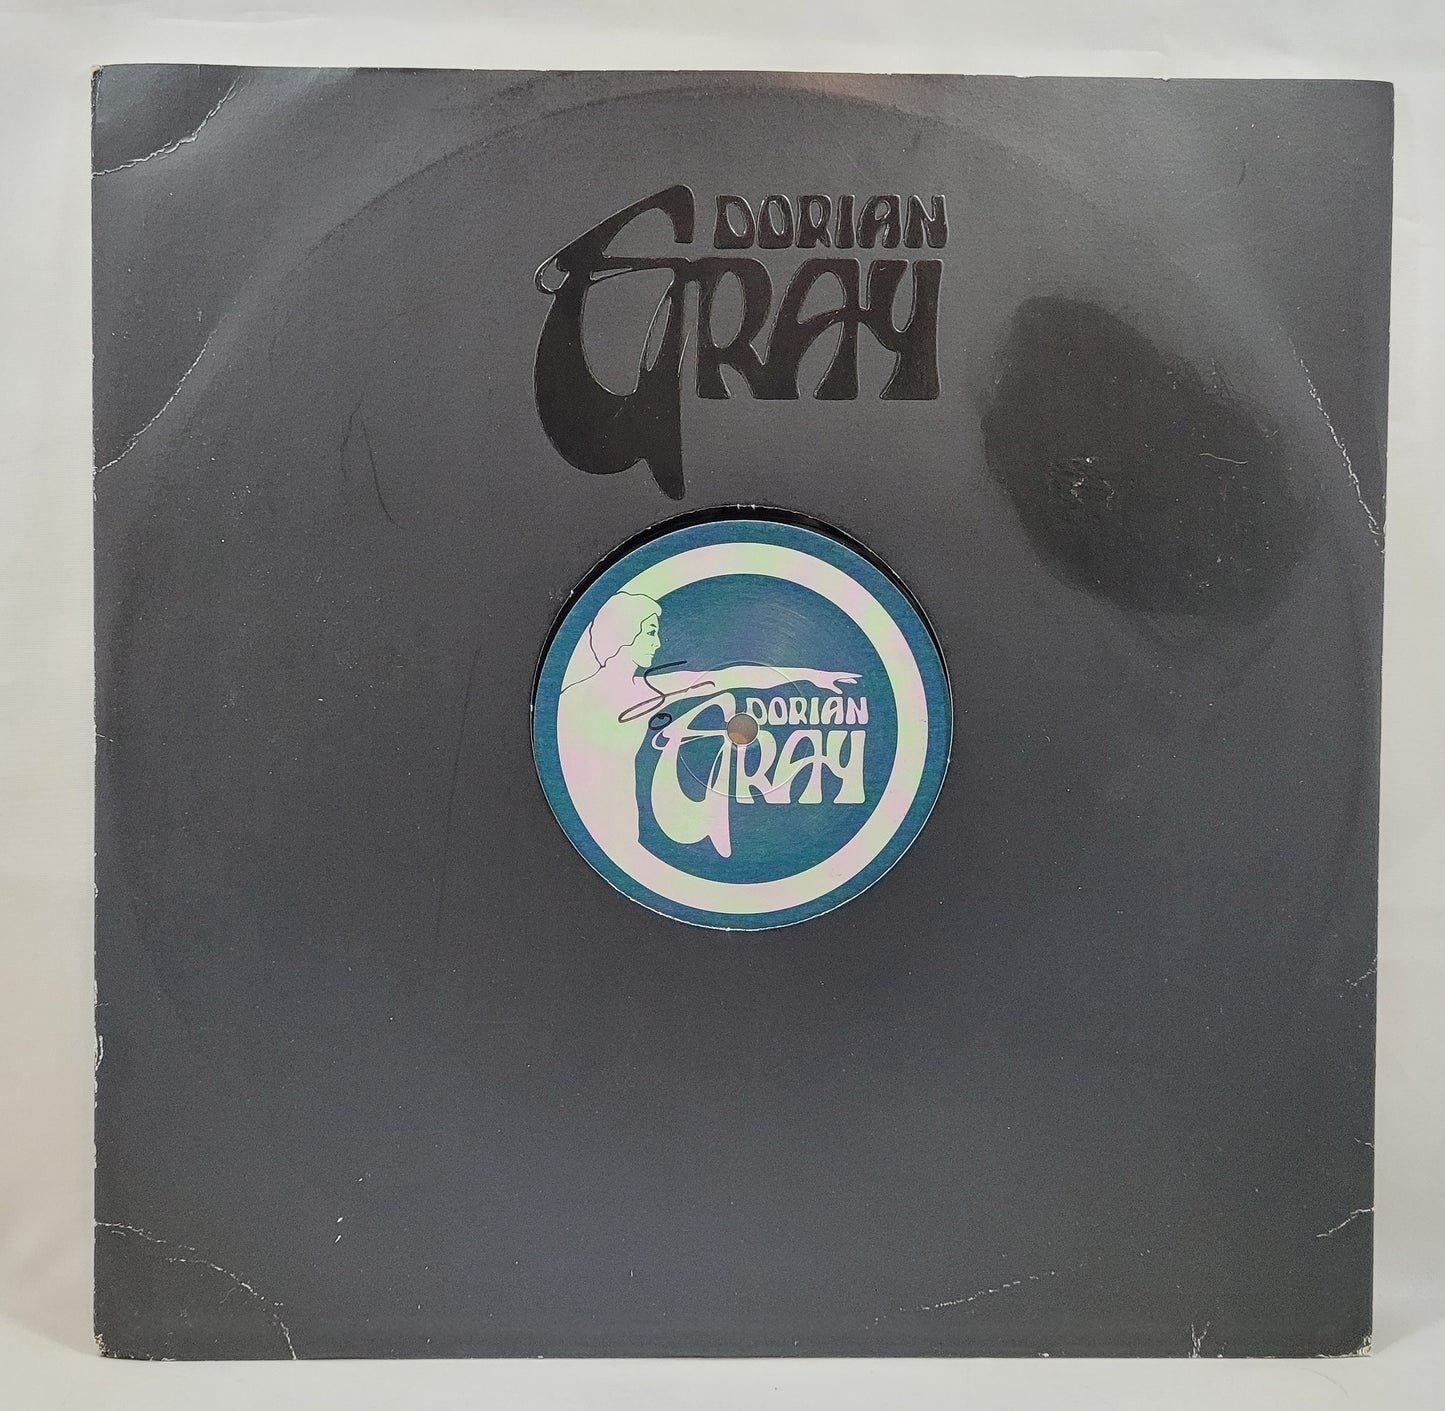 Jay Harker - Bela Lugosi's Dead [2002 Used Vinyl Record 12" Single]